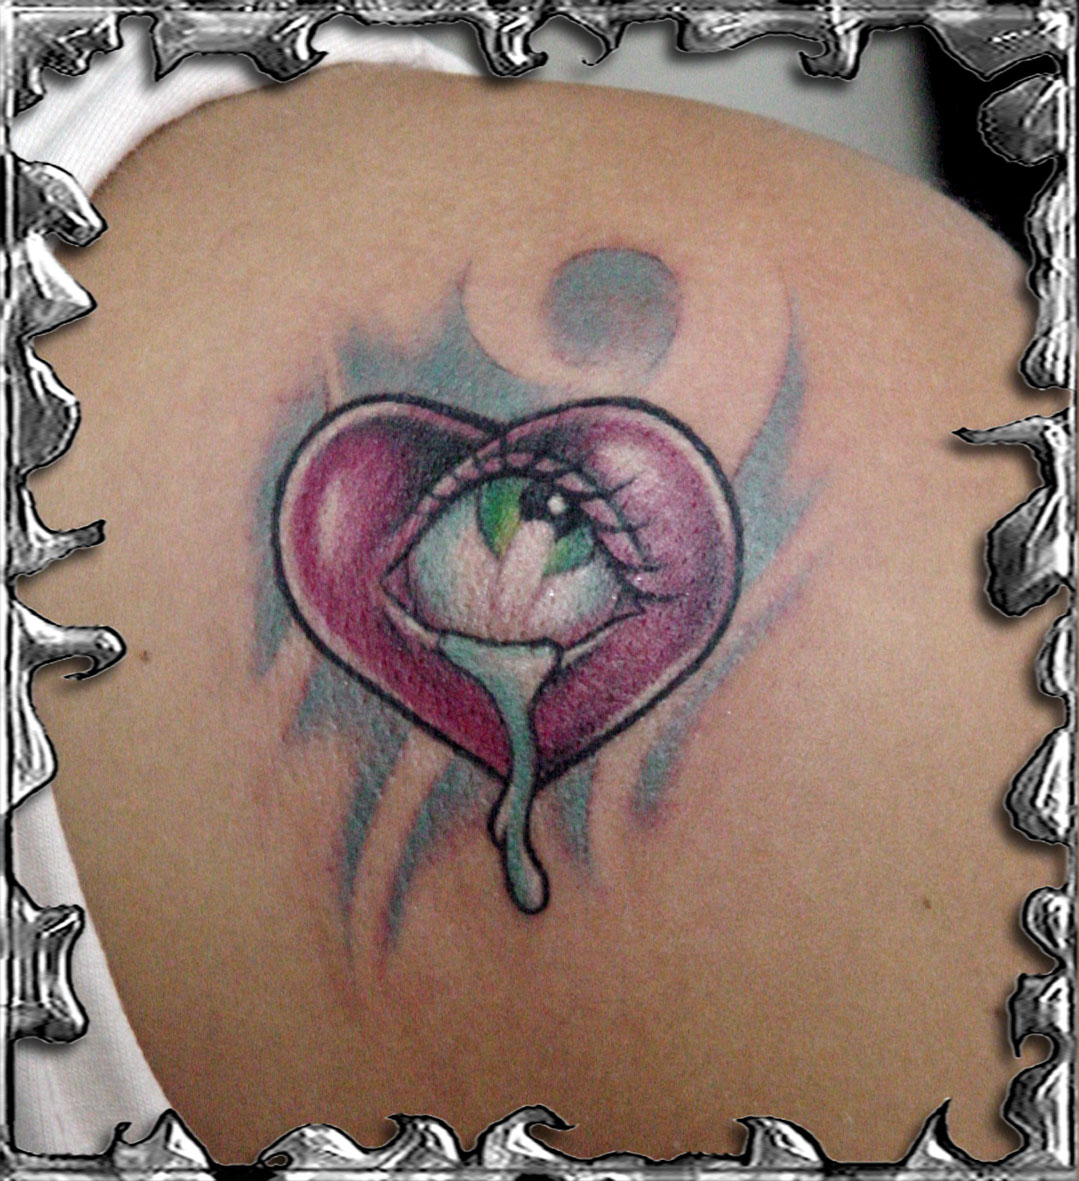 http://fc07.deviantart.net/fs20/f/2007/288/d/5/Crying_Heart___tattoo_by_mojotatboy.jpg